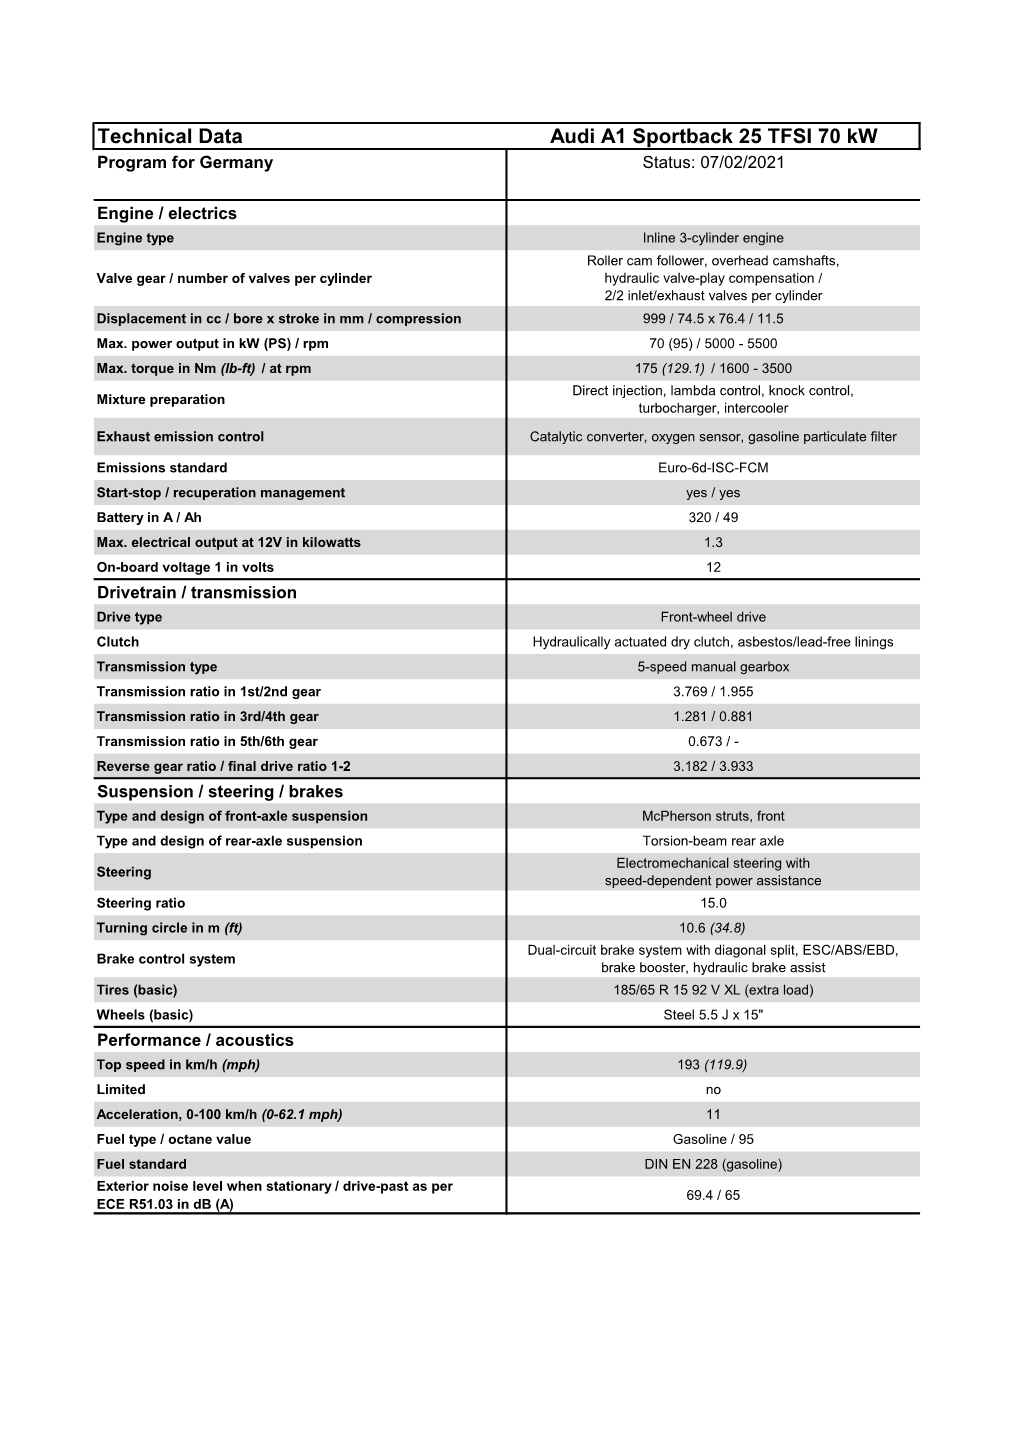 Technical Data Audi A1 Sportback 25 TFSI 70 Kw Program for Germany Status: 07/02/2021